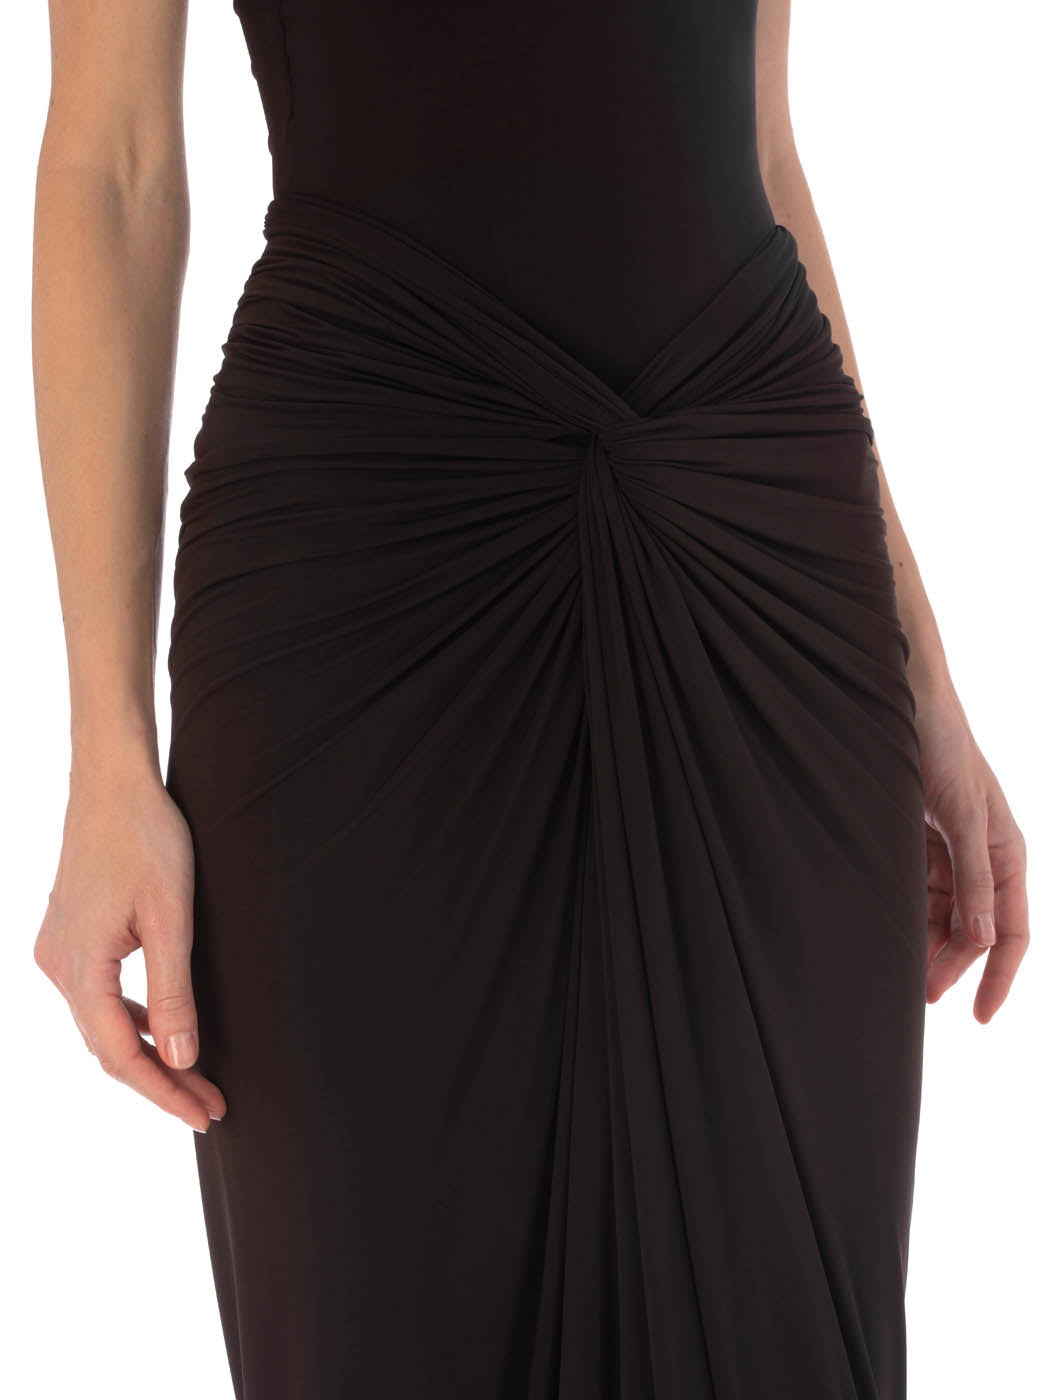 Calixta Skirt Brown draped silhouette asymmetrical skirt on a white background.